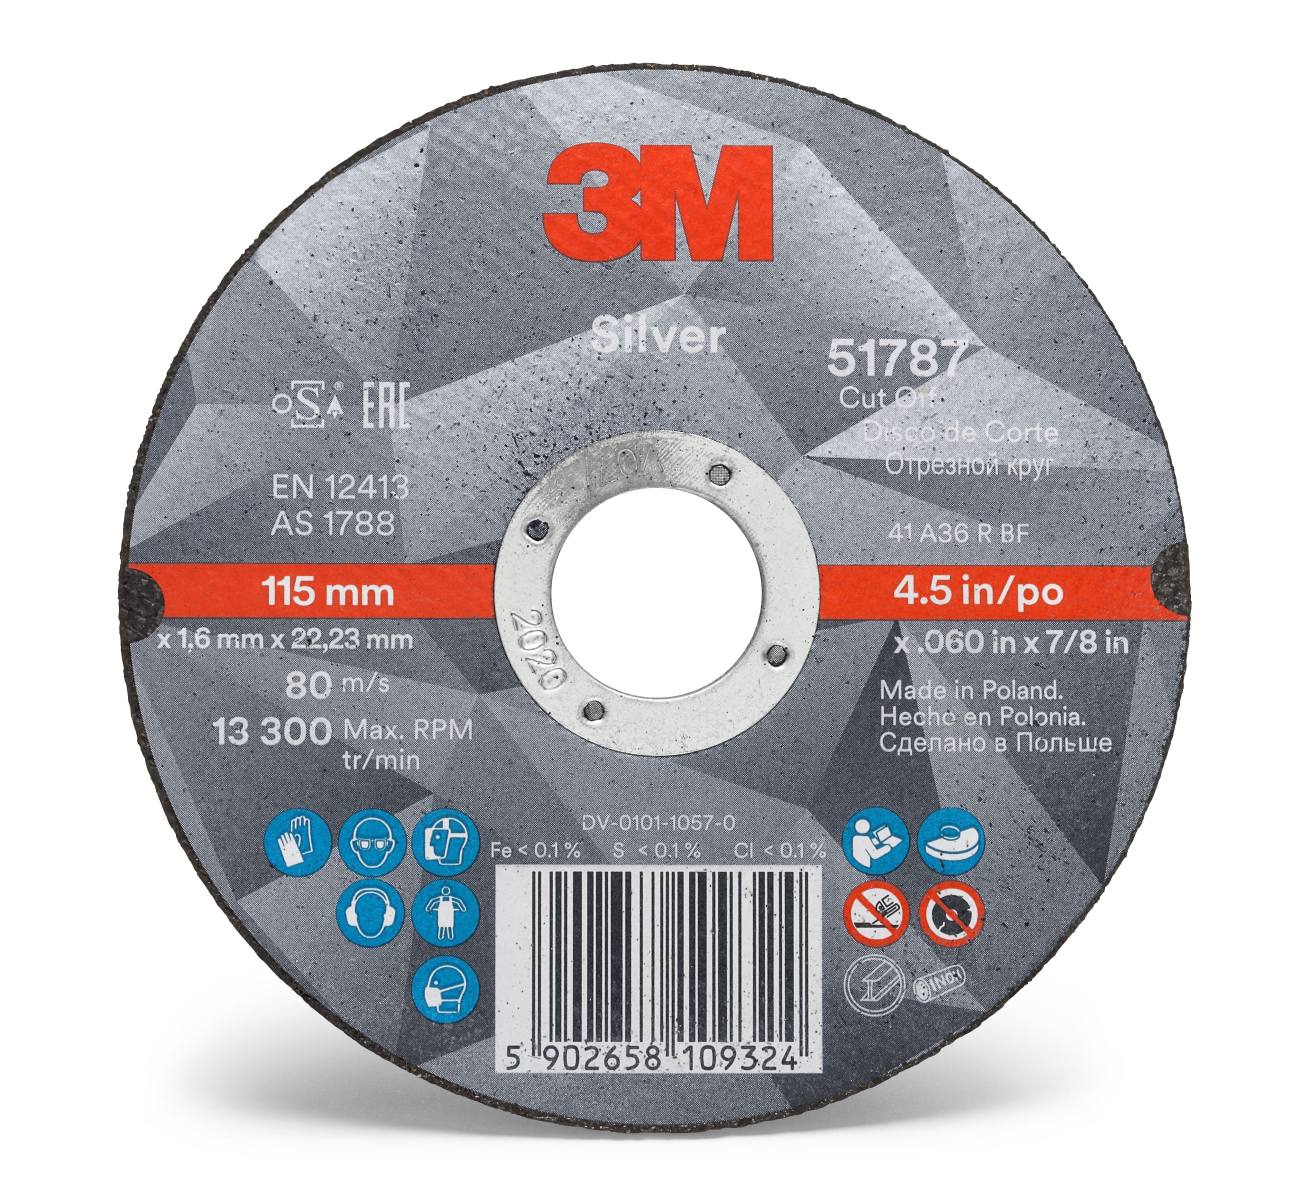 Disco de corte 3M Silver Cut-Off, 125 mm, 1,0 mm, 22,23 mm, T41, 51790